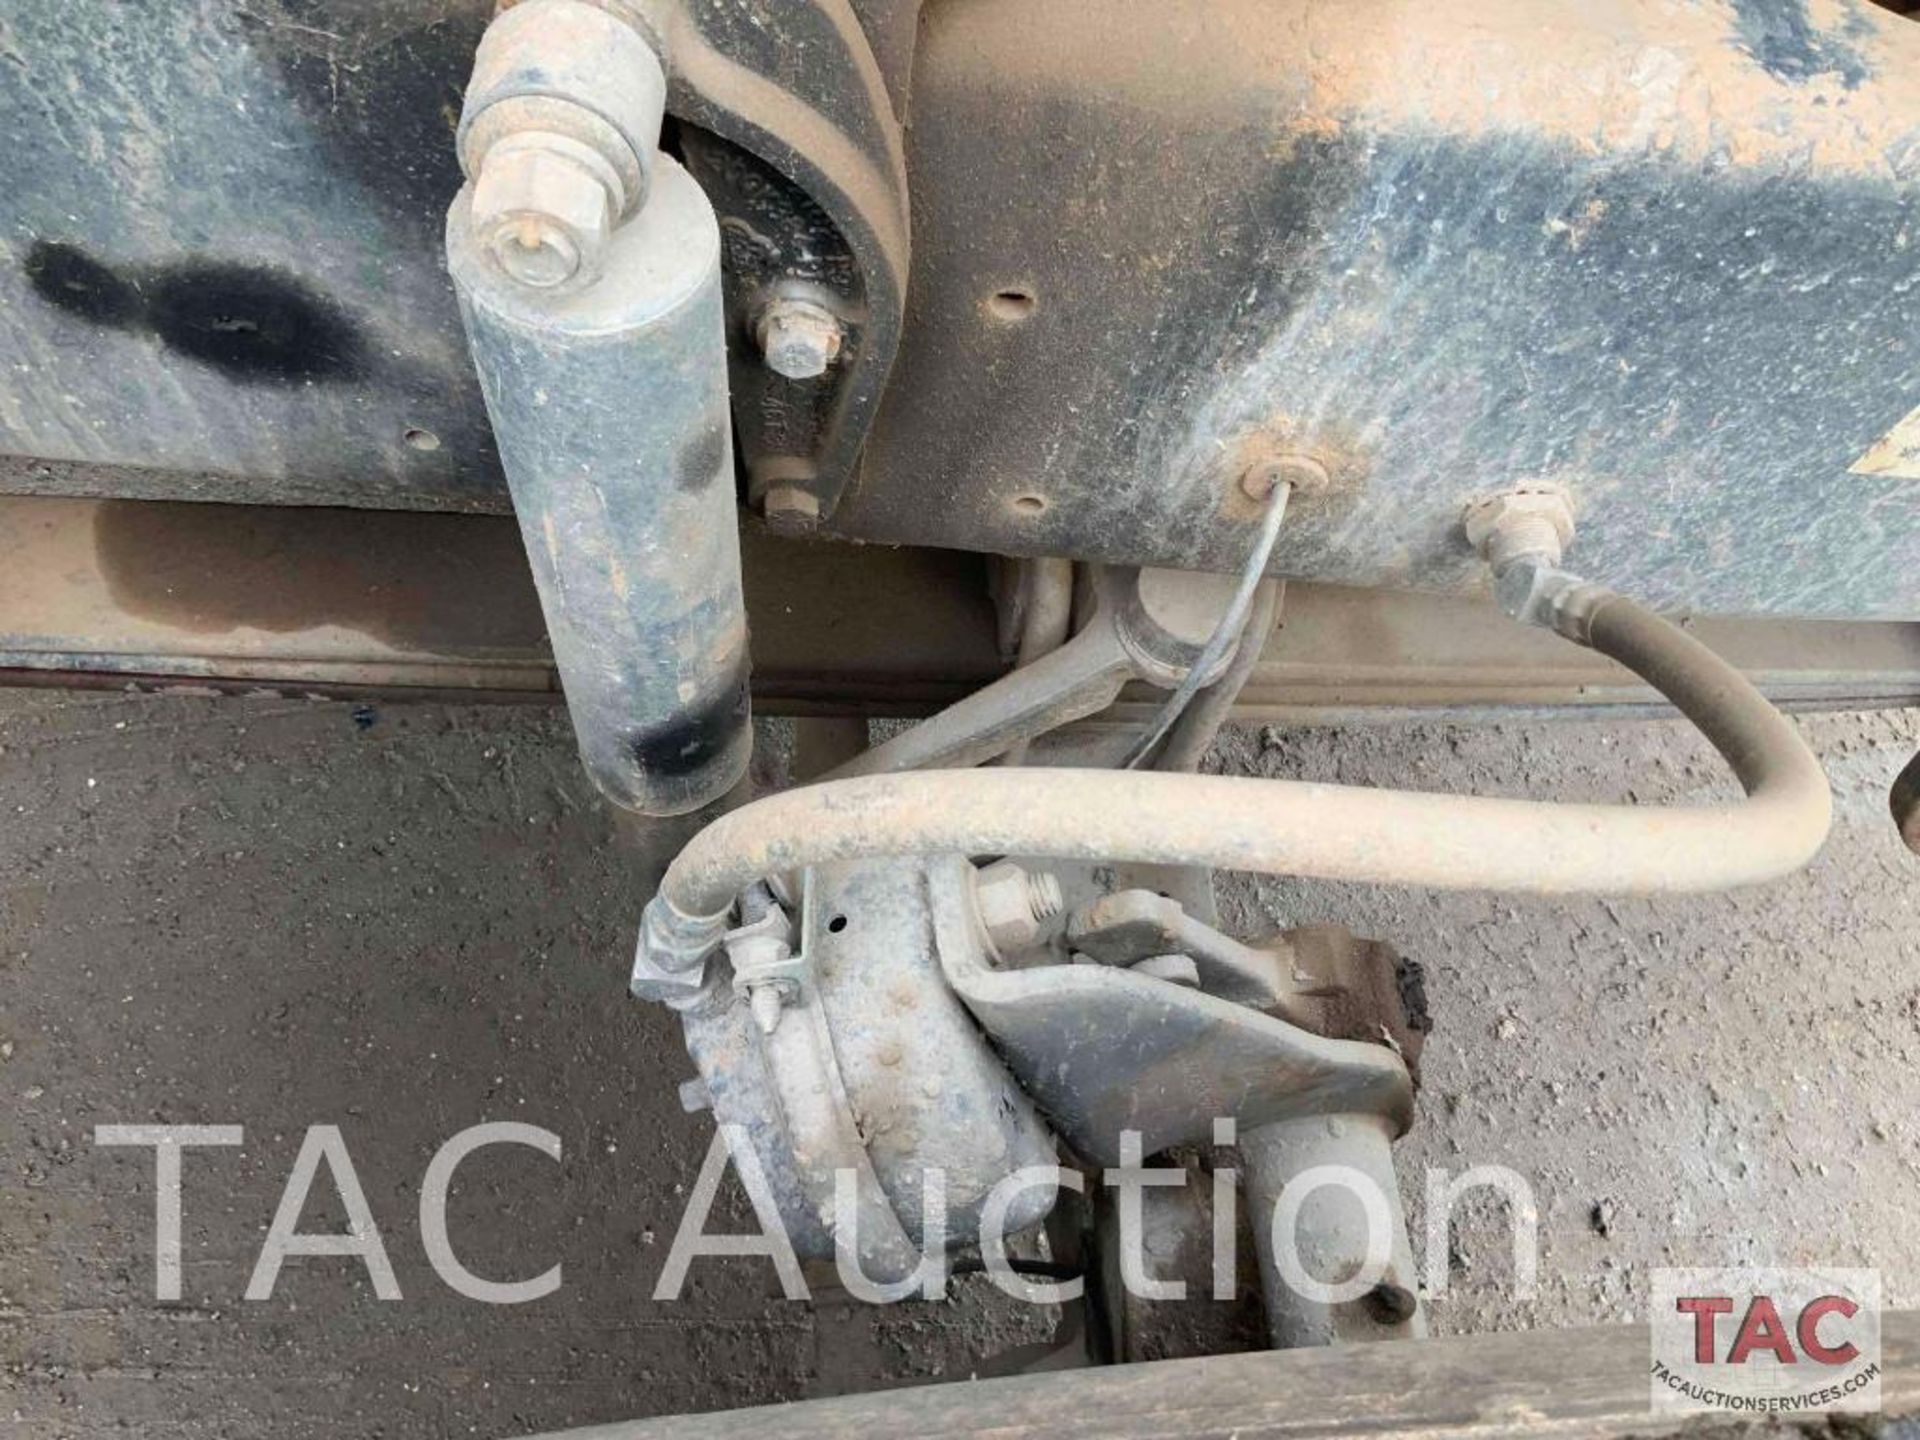 2005 Mack Granite Roll Off Truck - Image 136 of 176